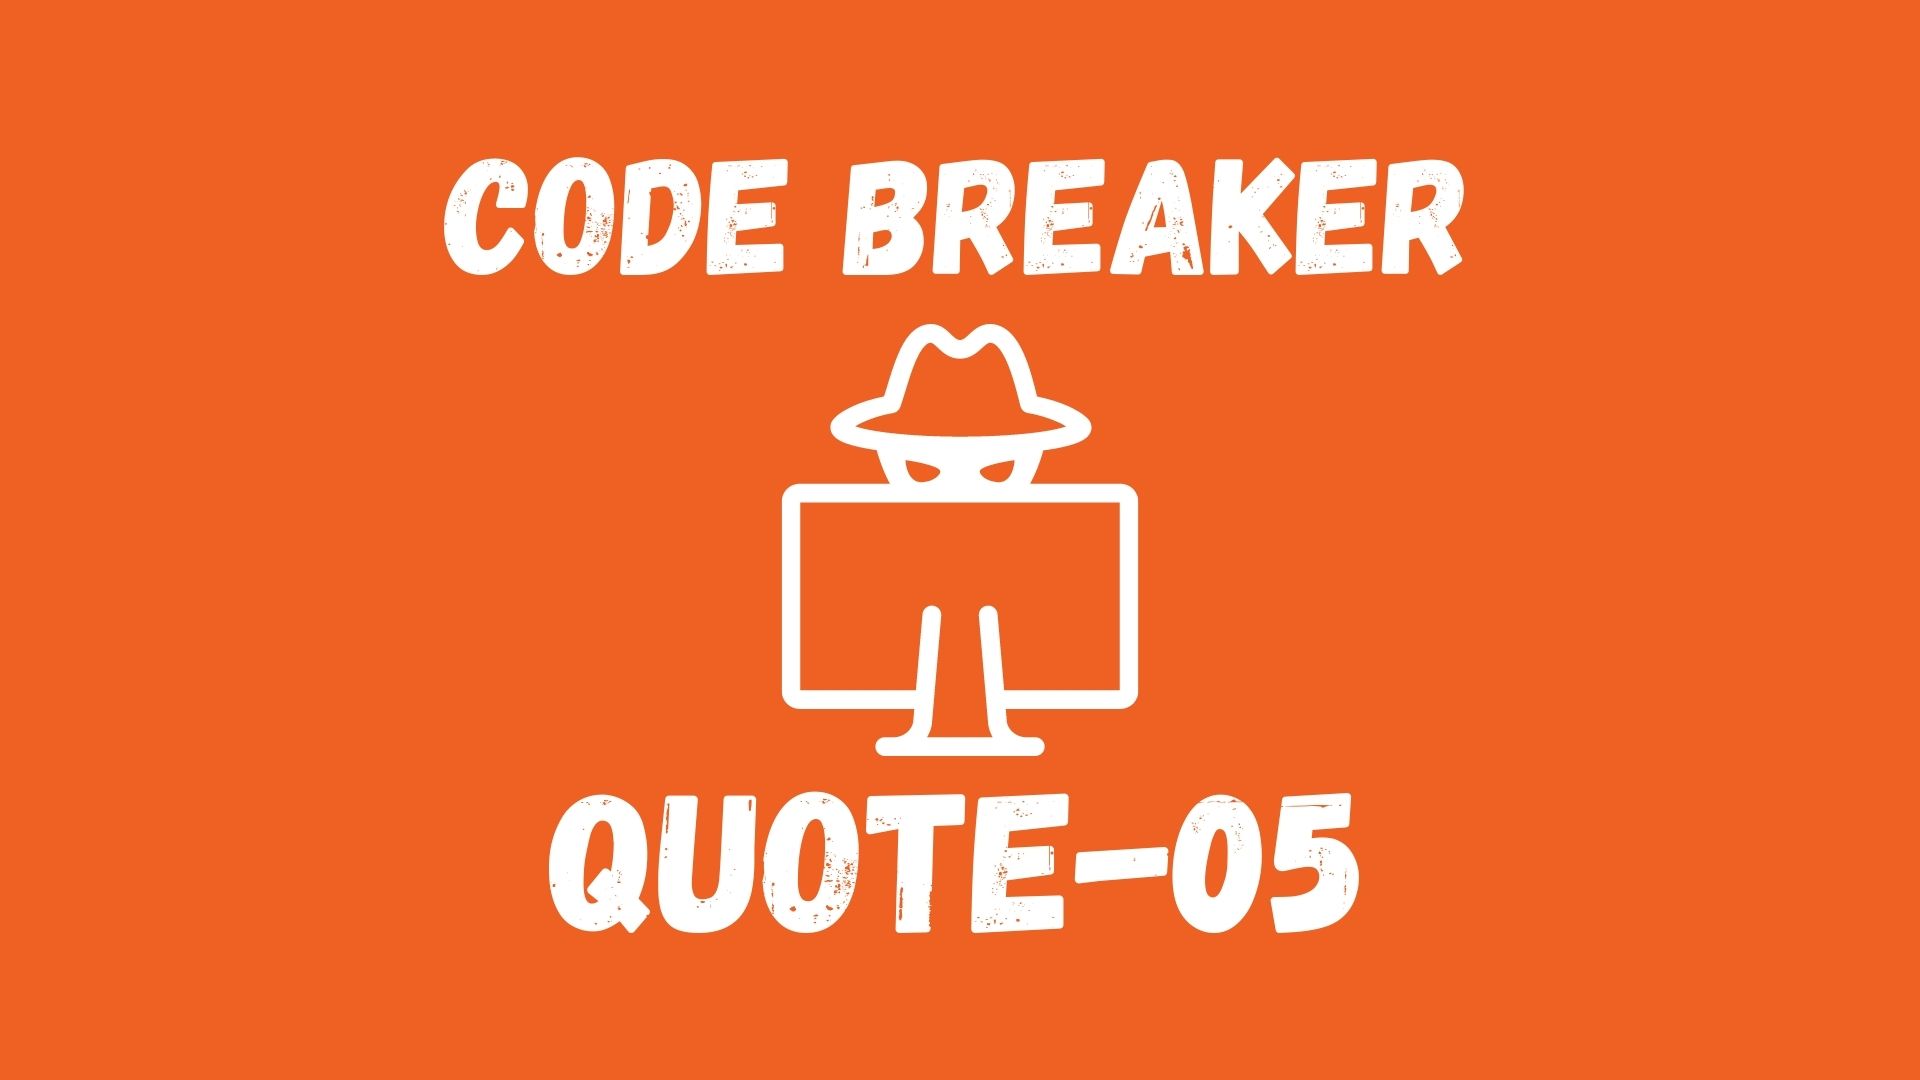 Code Breaker Decipher the Quote 05